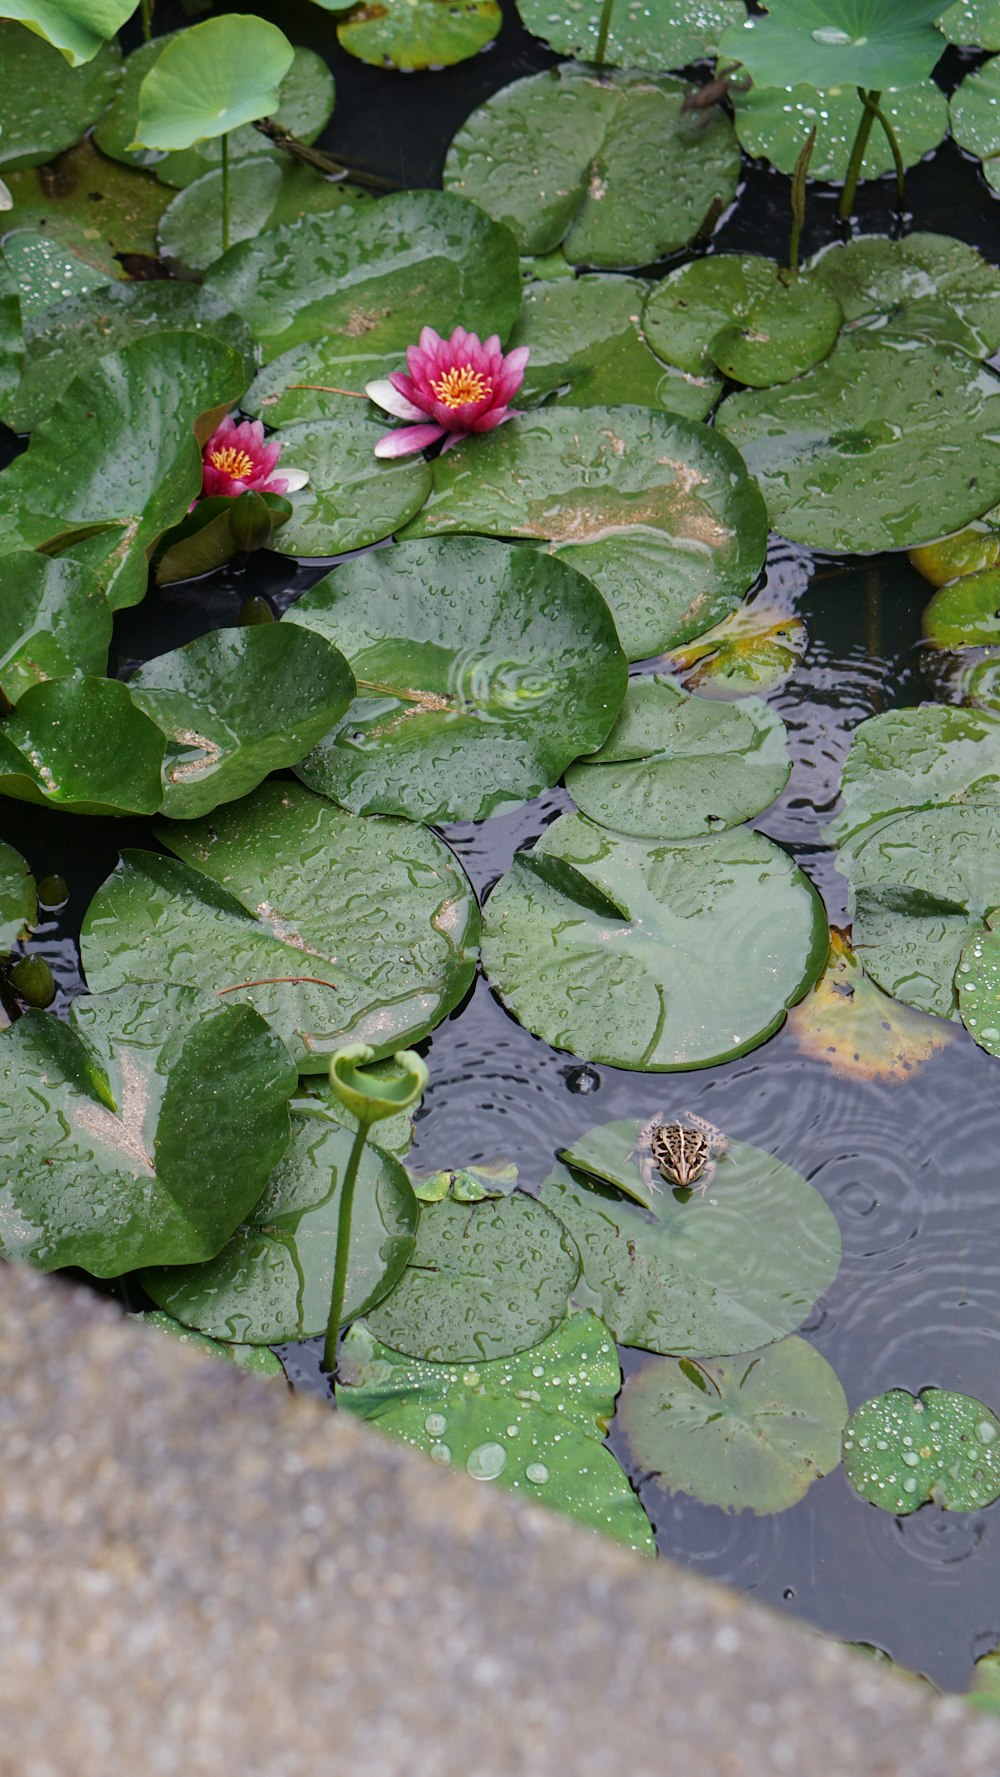 Un grupo de flores en un estanque